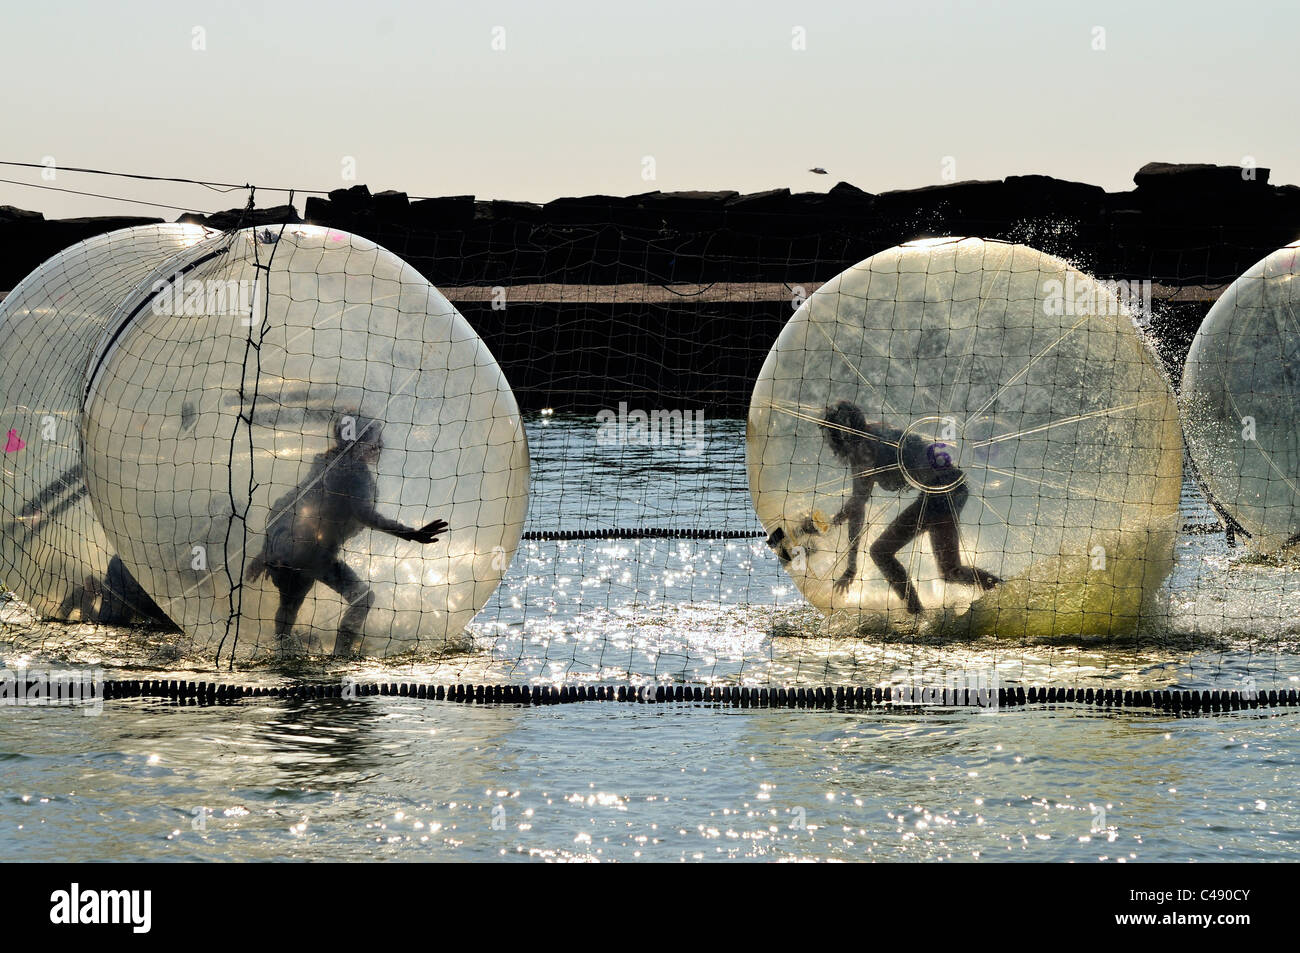 Children playing in zorbing balls on water Stock Photo